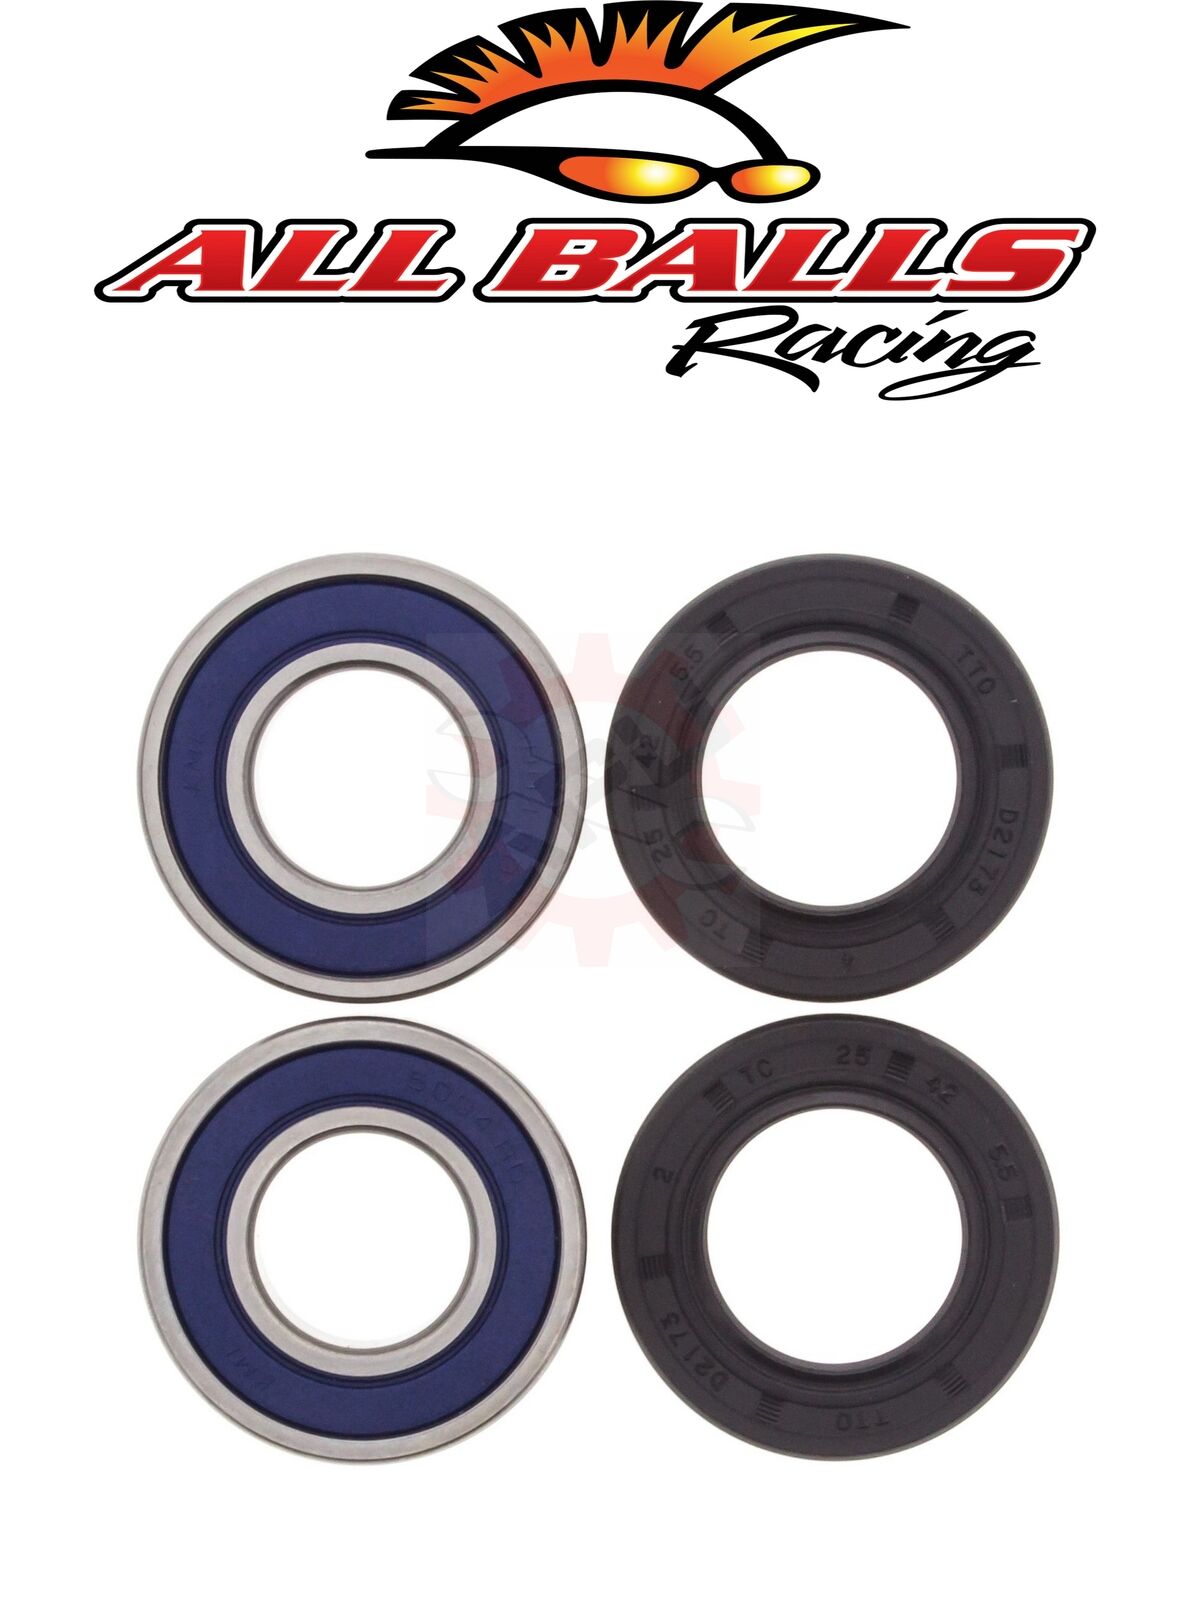 Rear Wheel Bearings KLX650R 93-96 KX 125 250 86-96 KX500 86-93 ALL BALLS